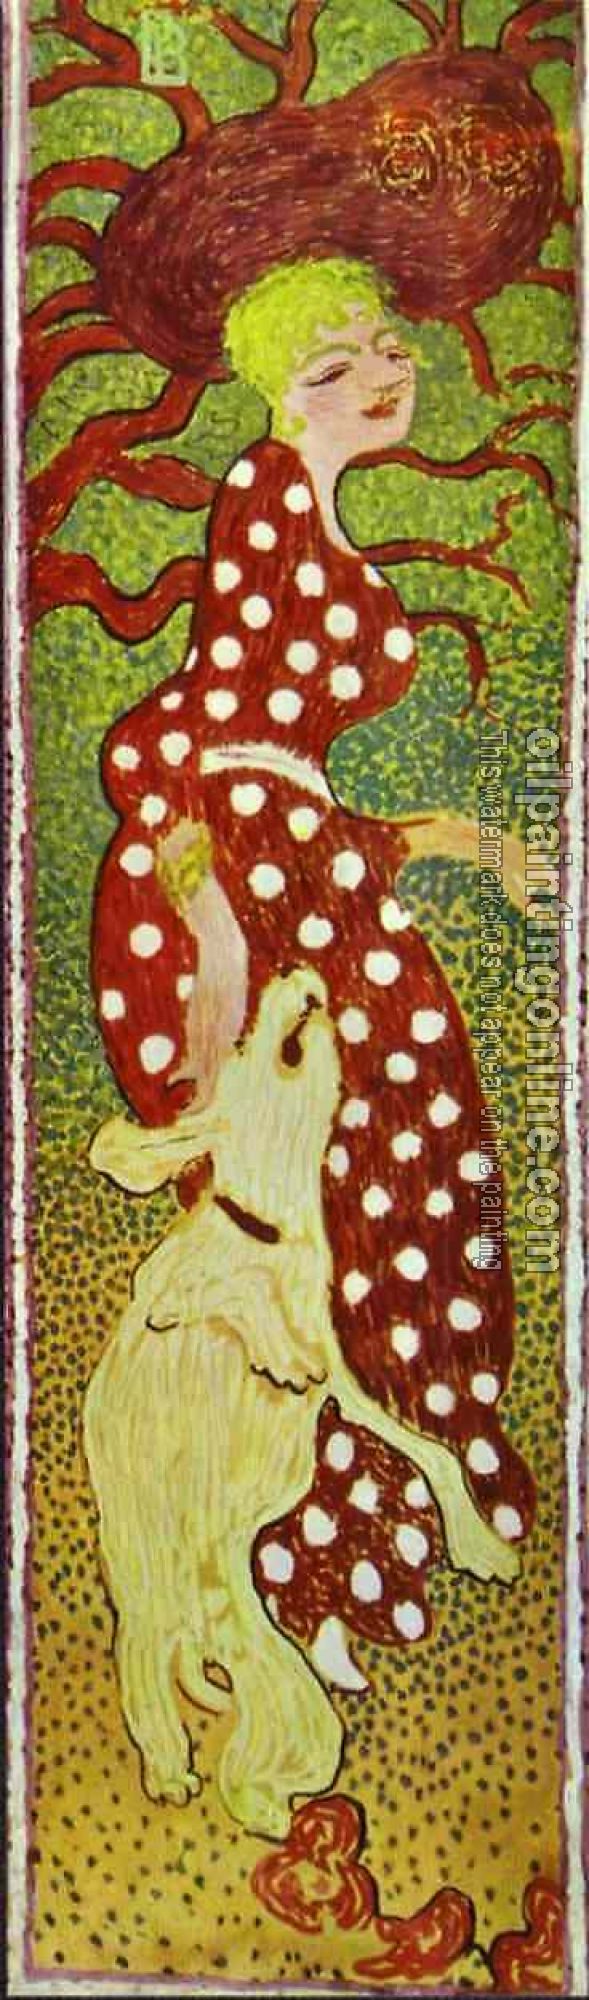 Pierre Bonnard - Woman in a Polka Dot Dress